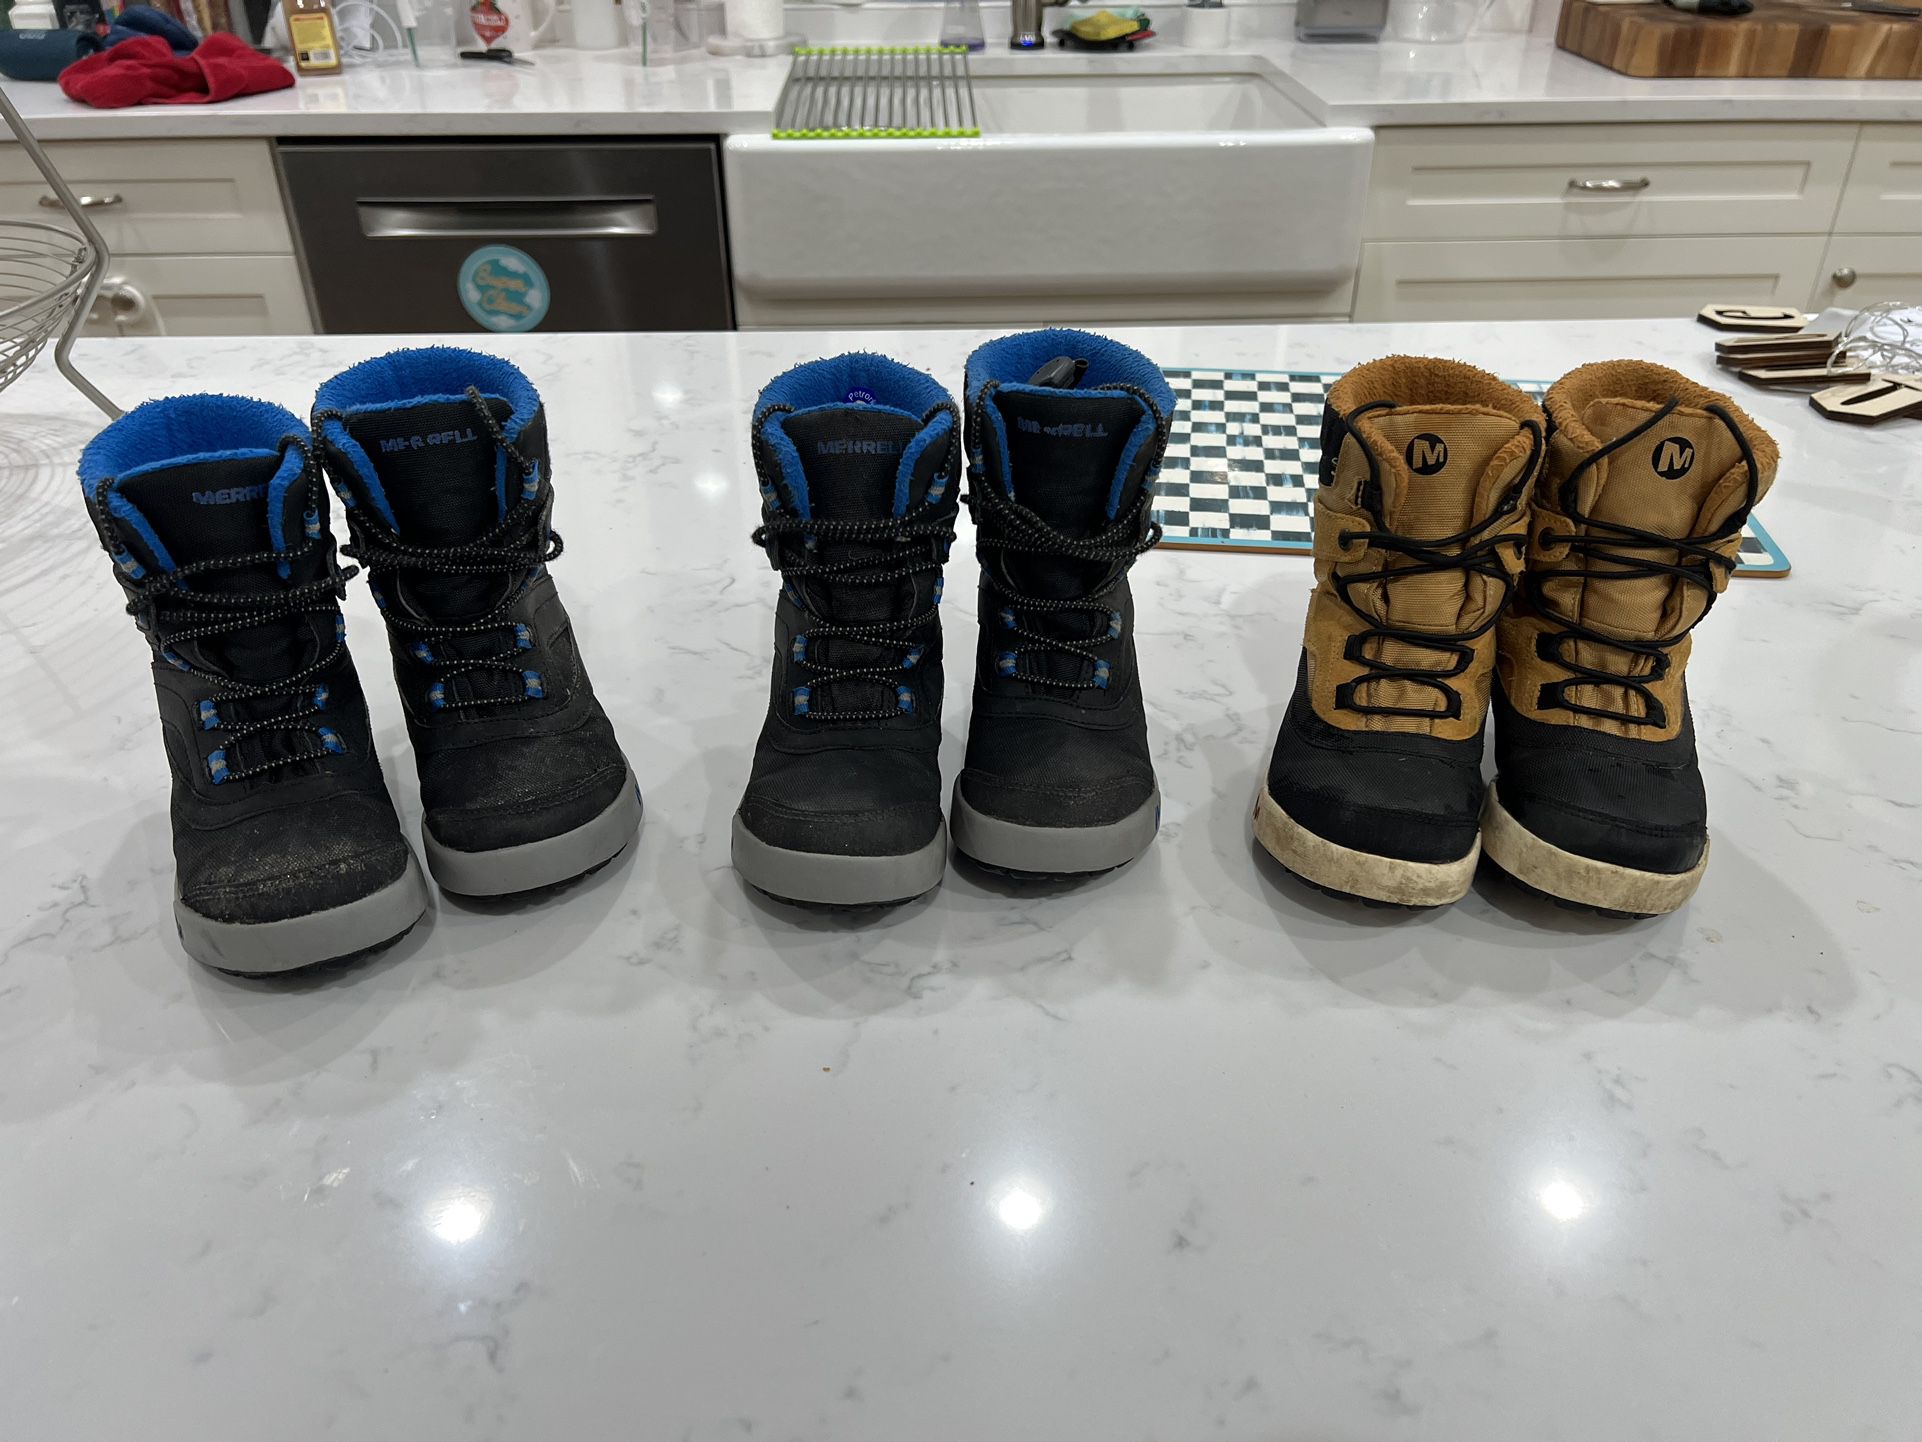 Merrell Boy’s Snow Bank Winter Boots - Size 10